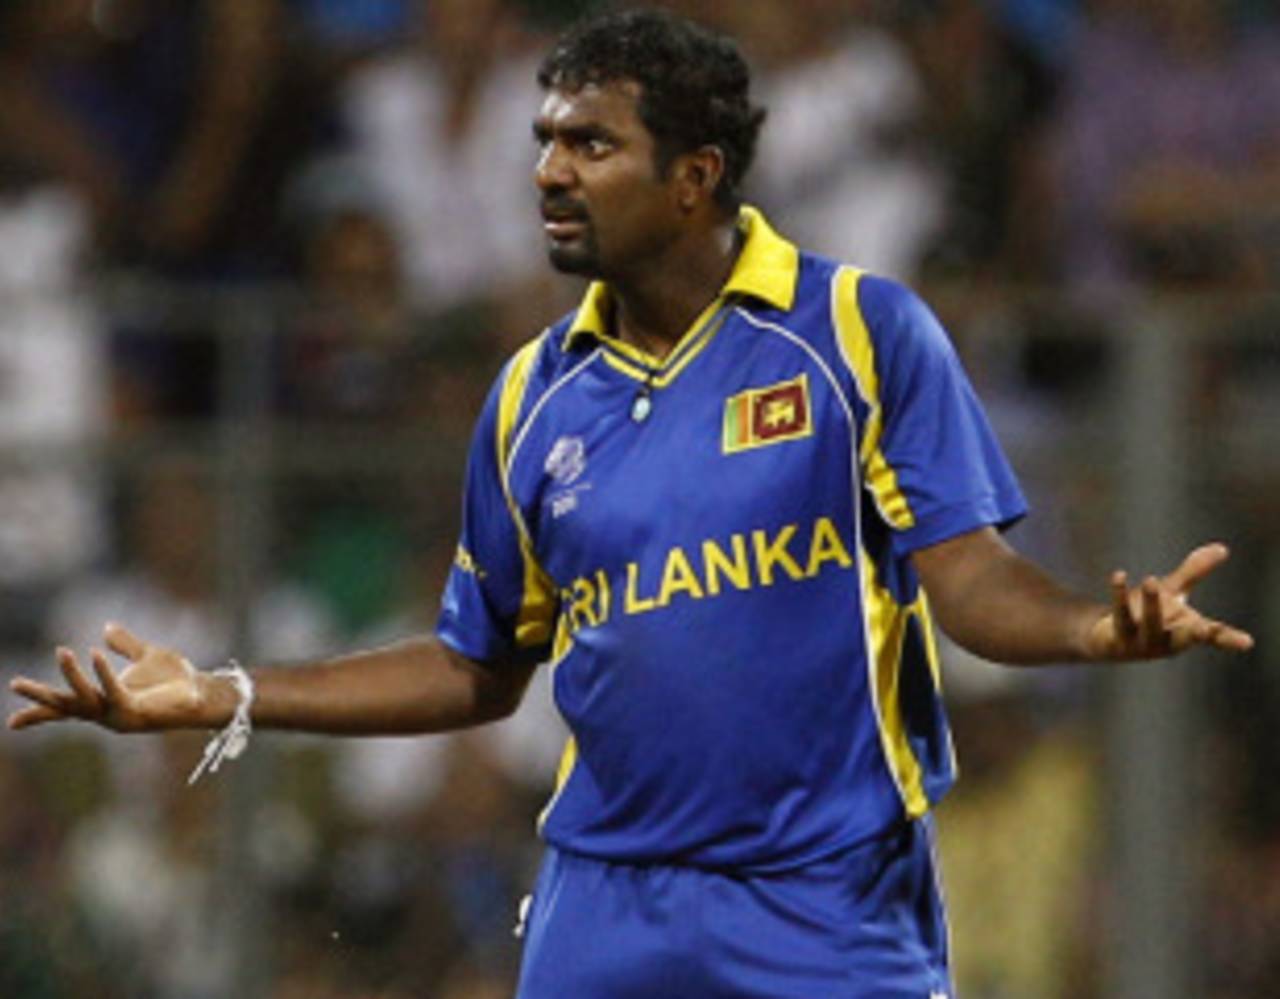 Muttiah Muralitharan has slammed SLC's decision to recall the Sri Lankan players early from the IPL&nbsp;&nbsp;&bull;&nbsp;&nbsp;Associated Press